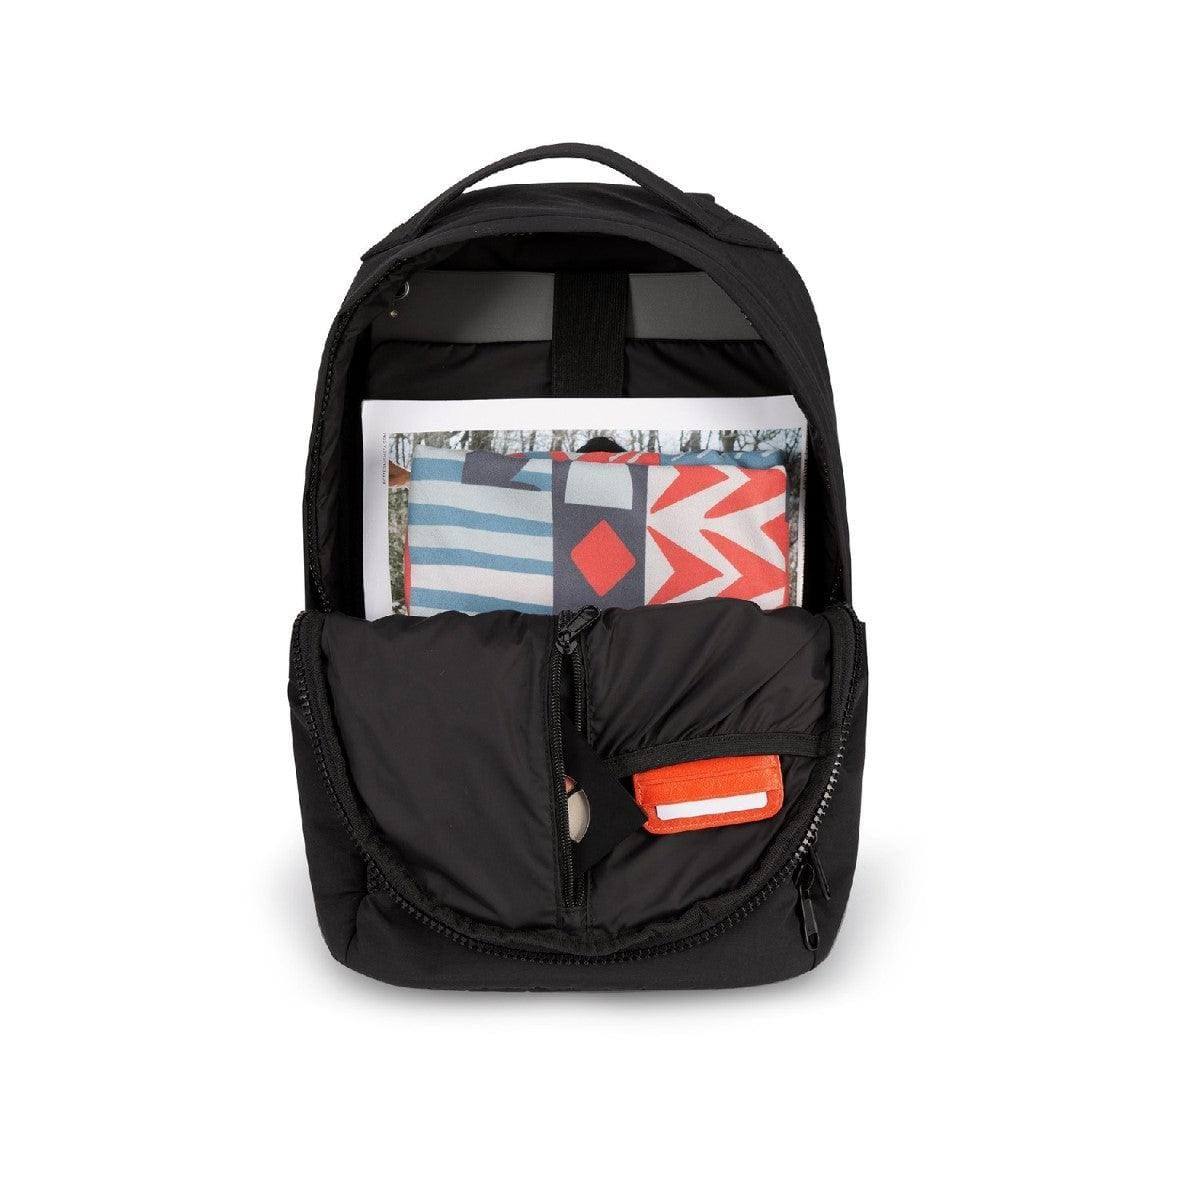 Bagsmart Zoraesque Daily Backpack - Black